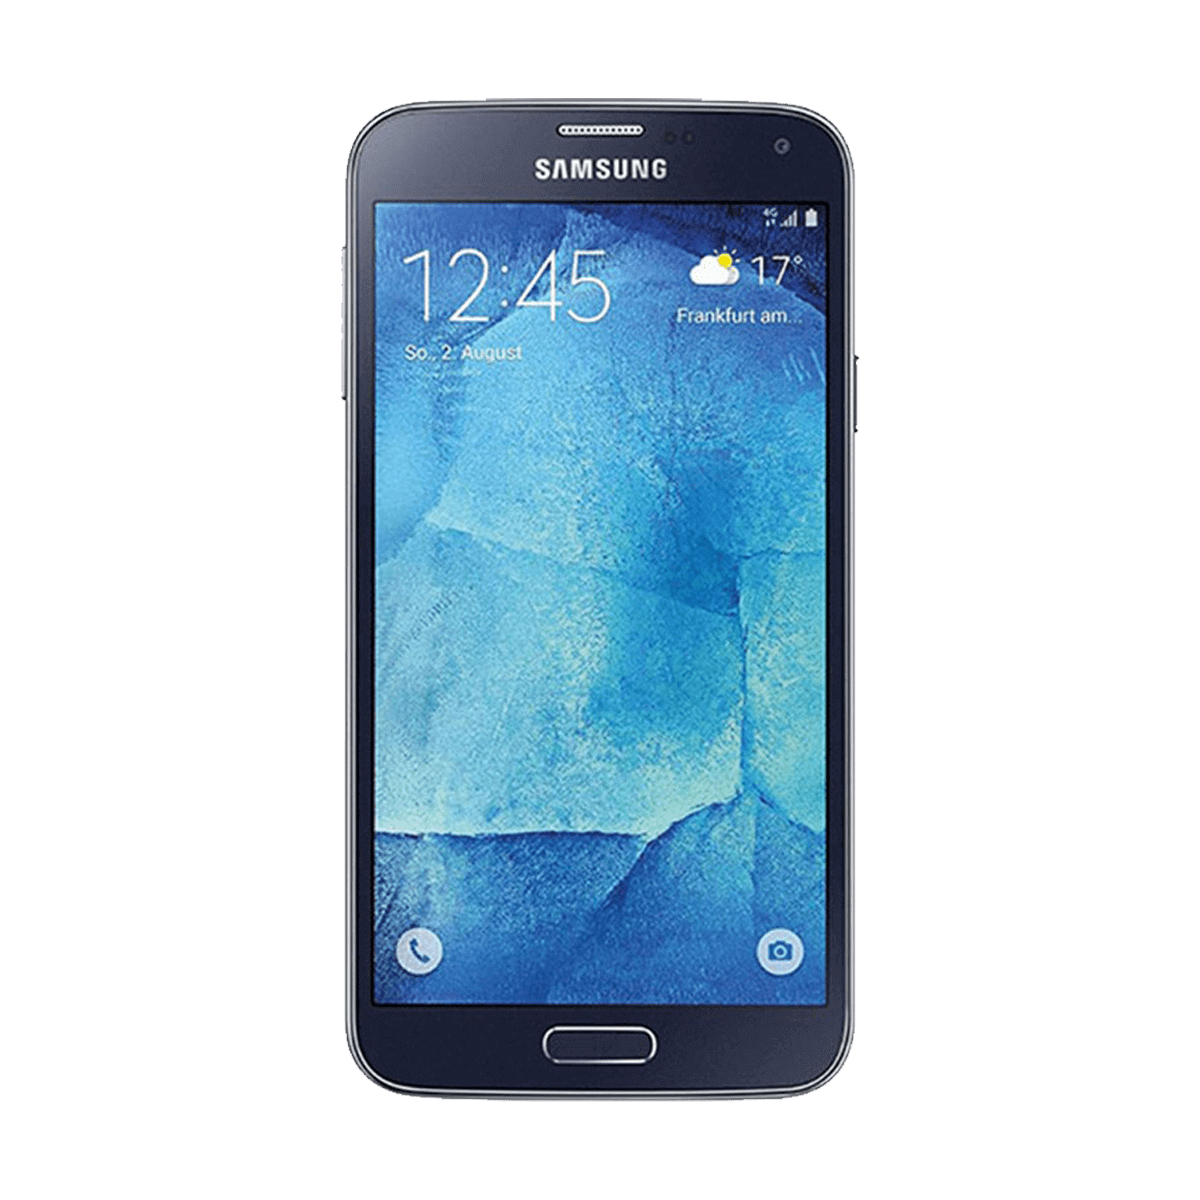 Samsung galaxy s5 neo unlock code generator free